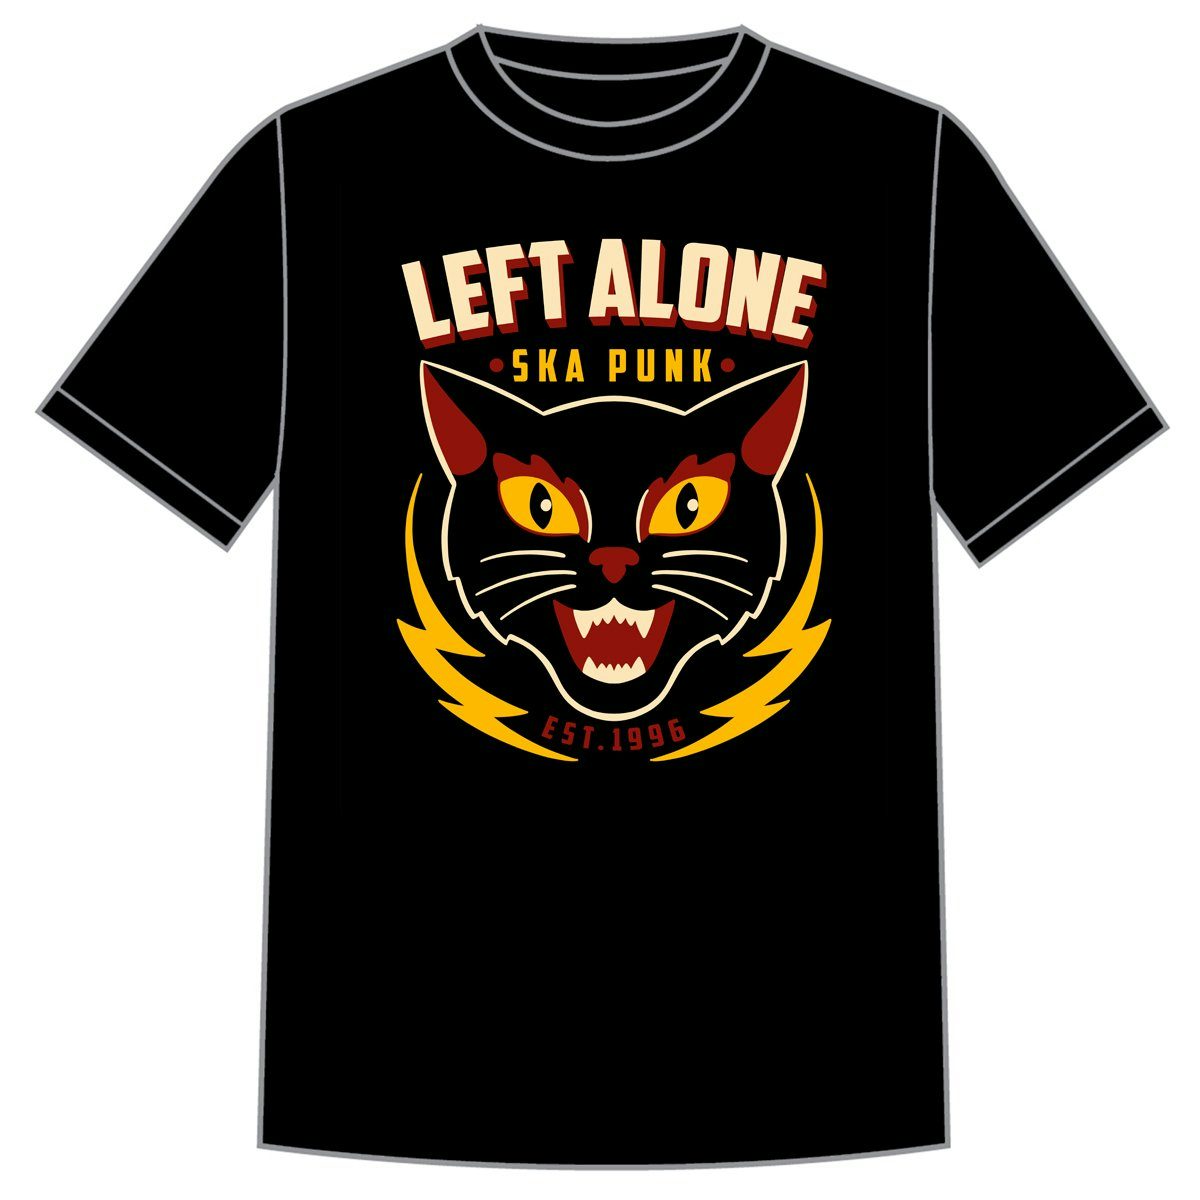 Left Alone 